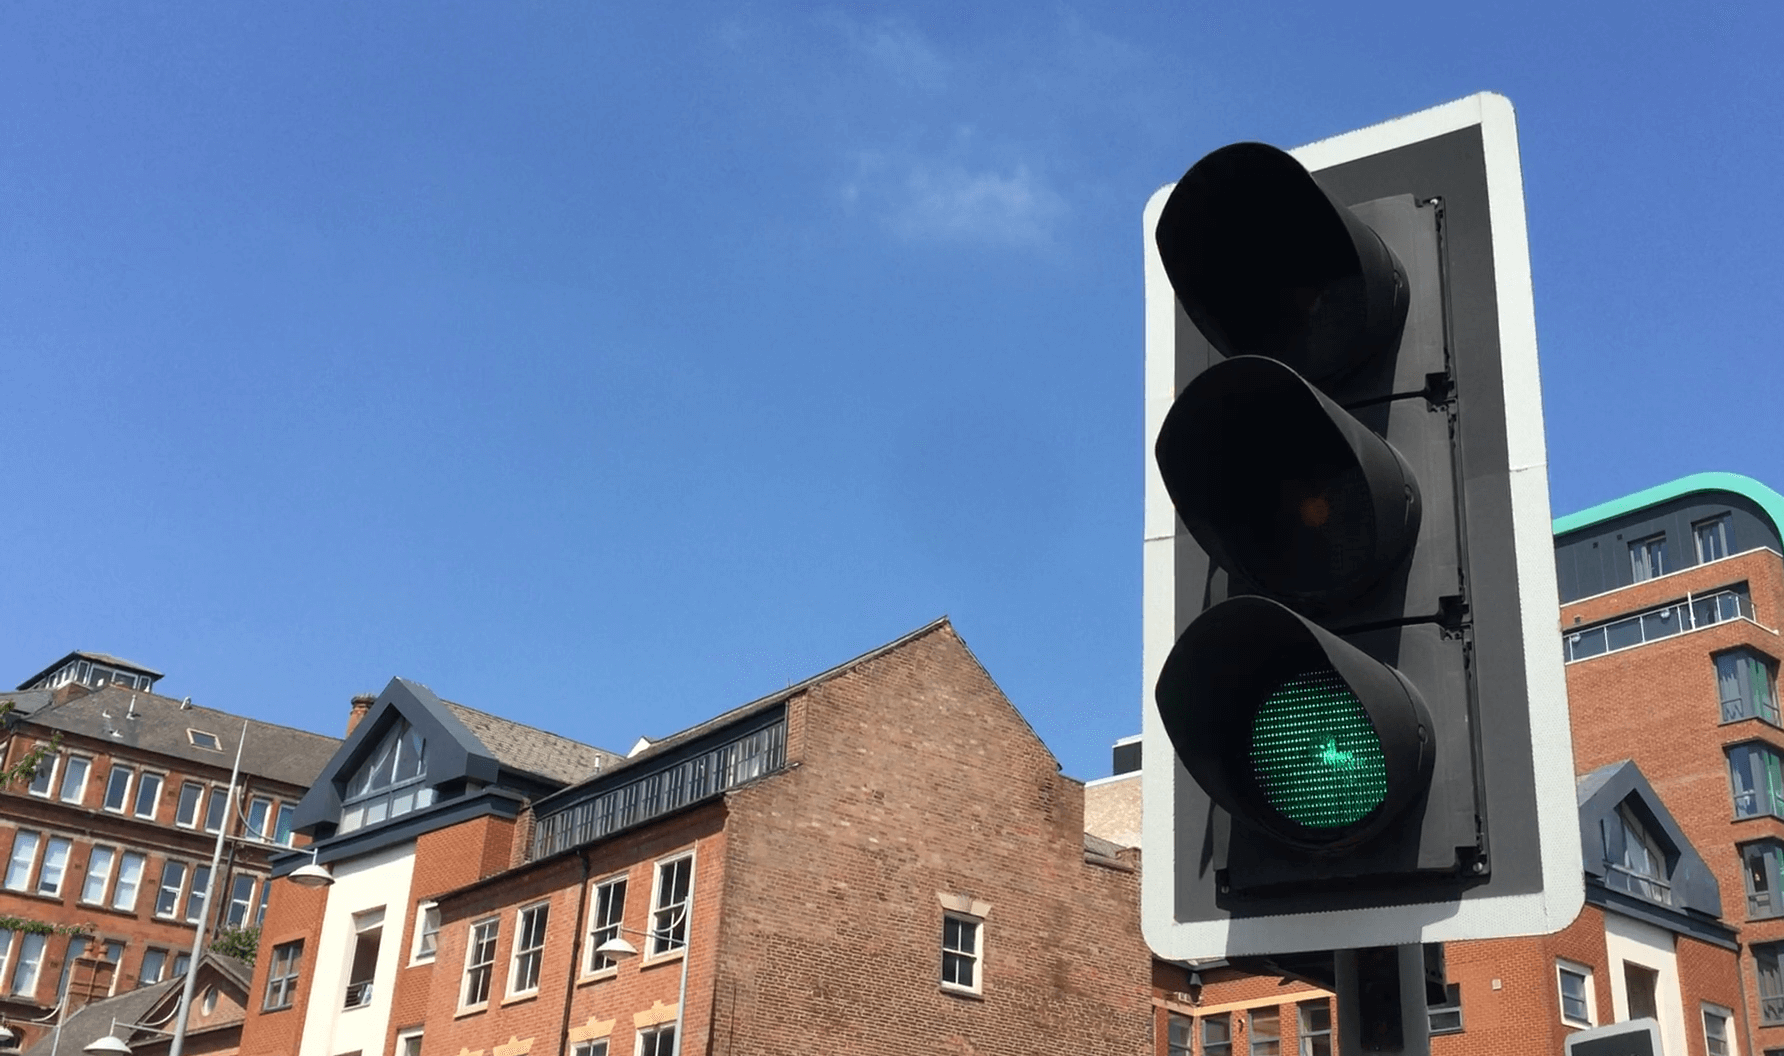 green traffic signal